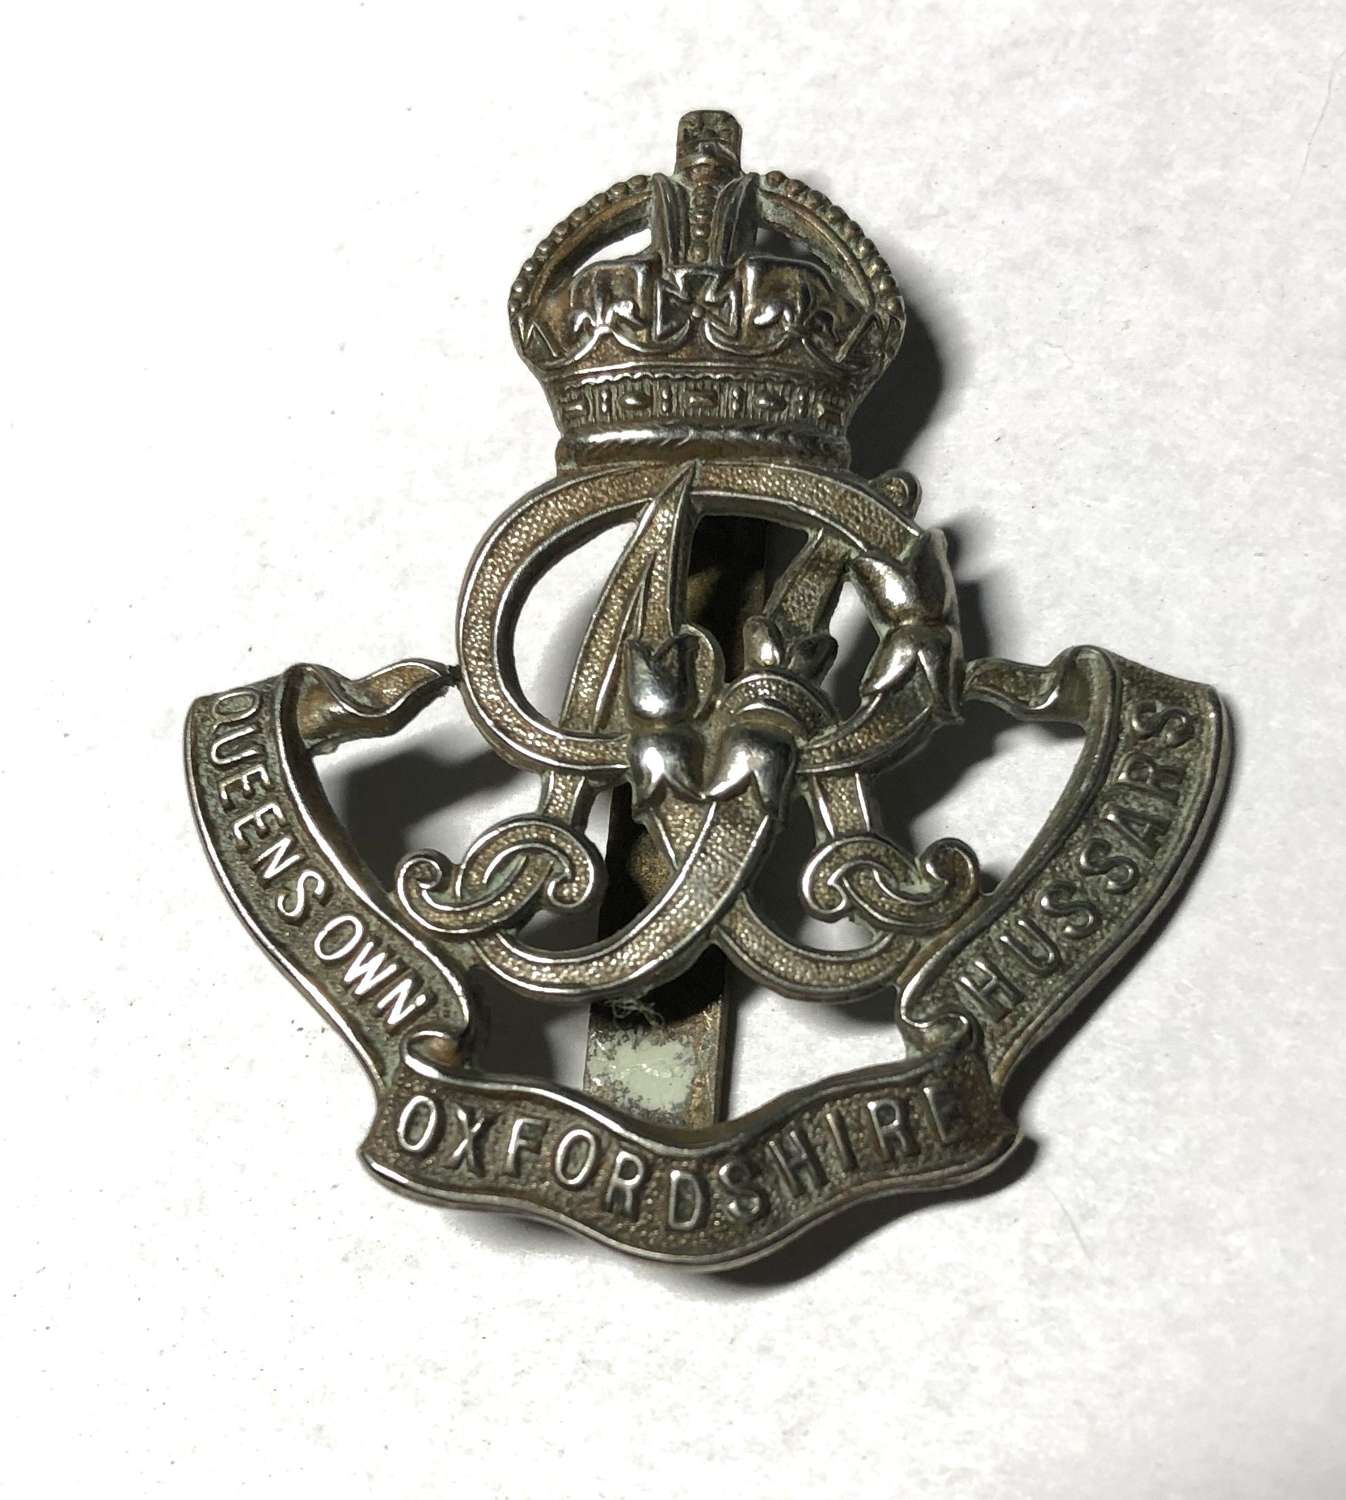 Queen’s Own Oxfordshire Hussars cap badge